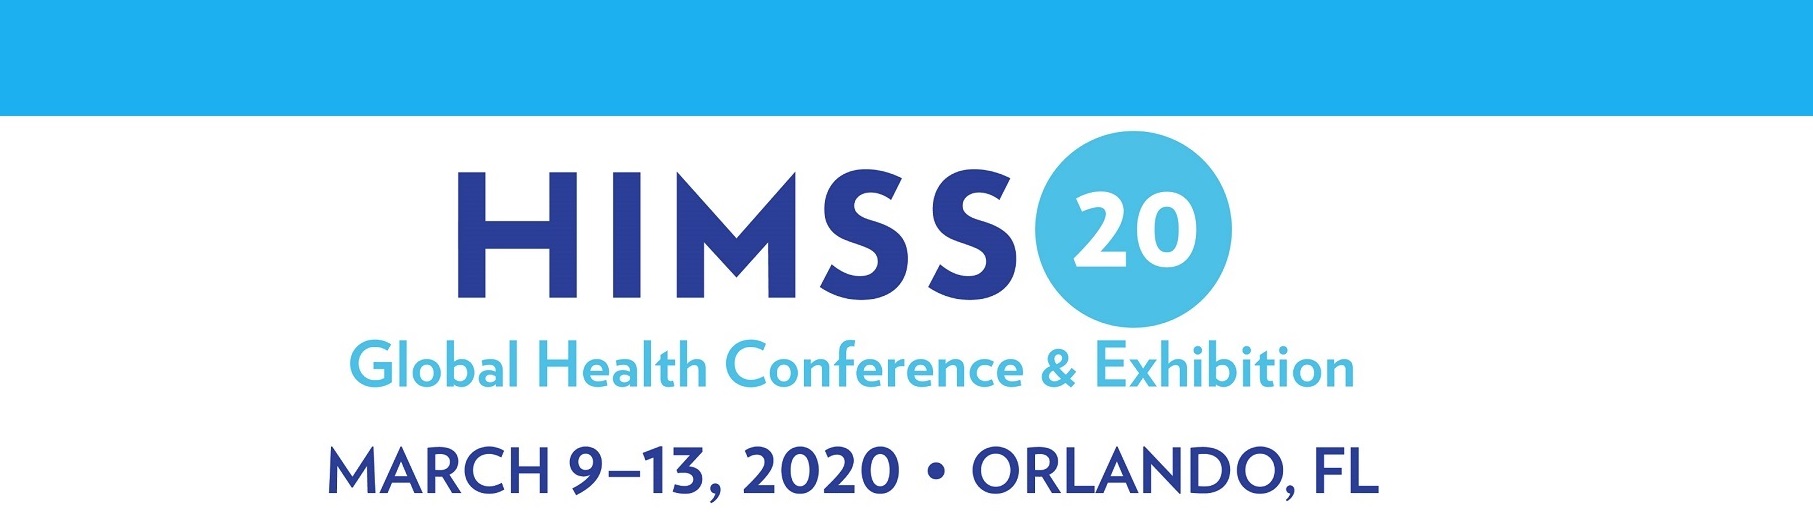 HIMSS 2020 Conference - Orlando, FL